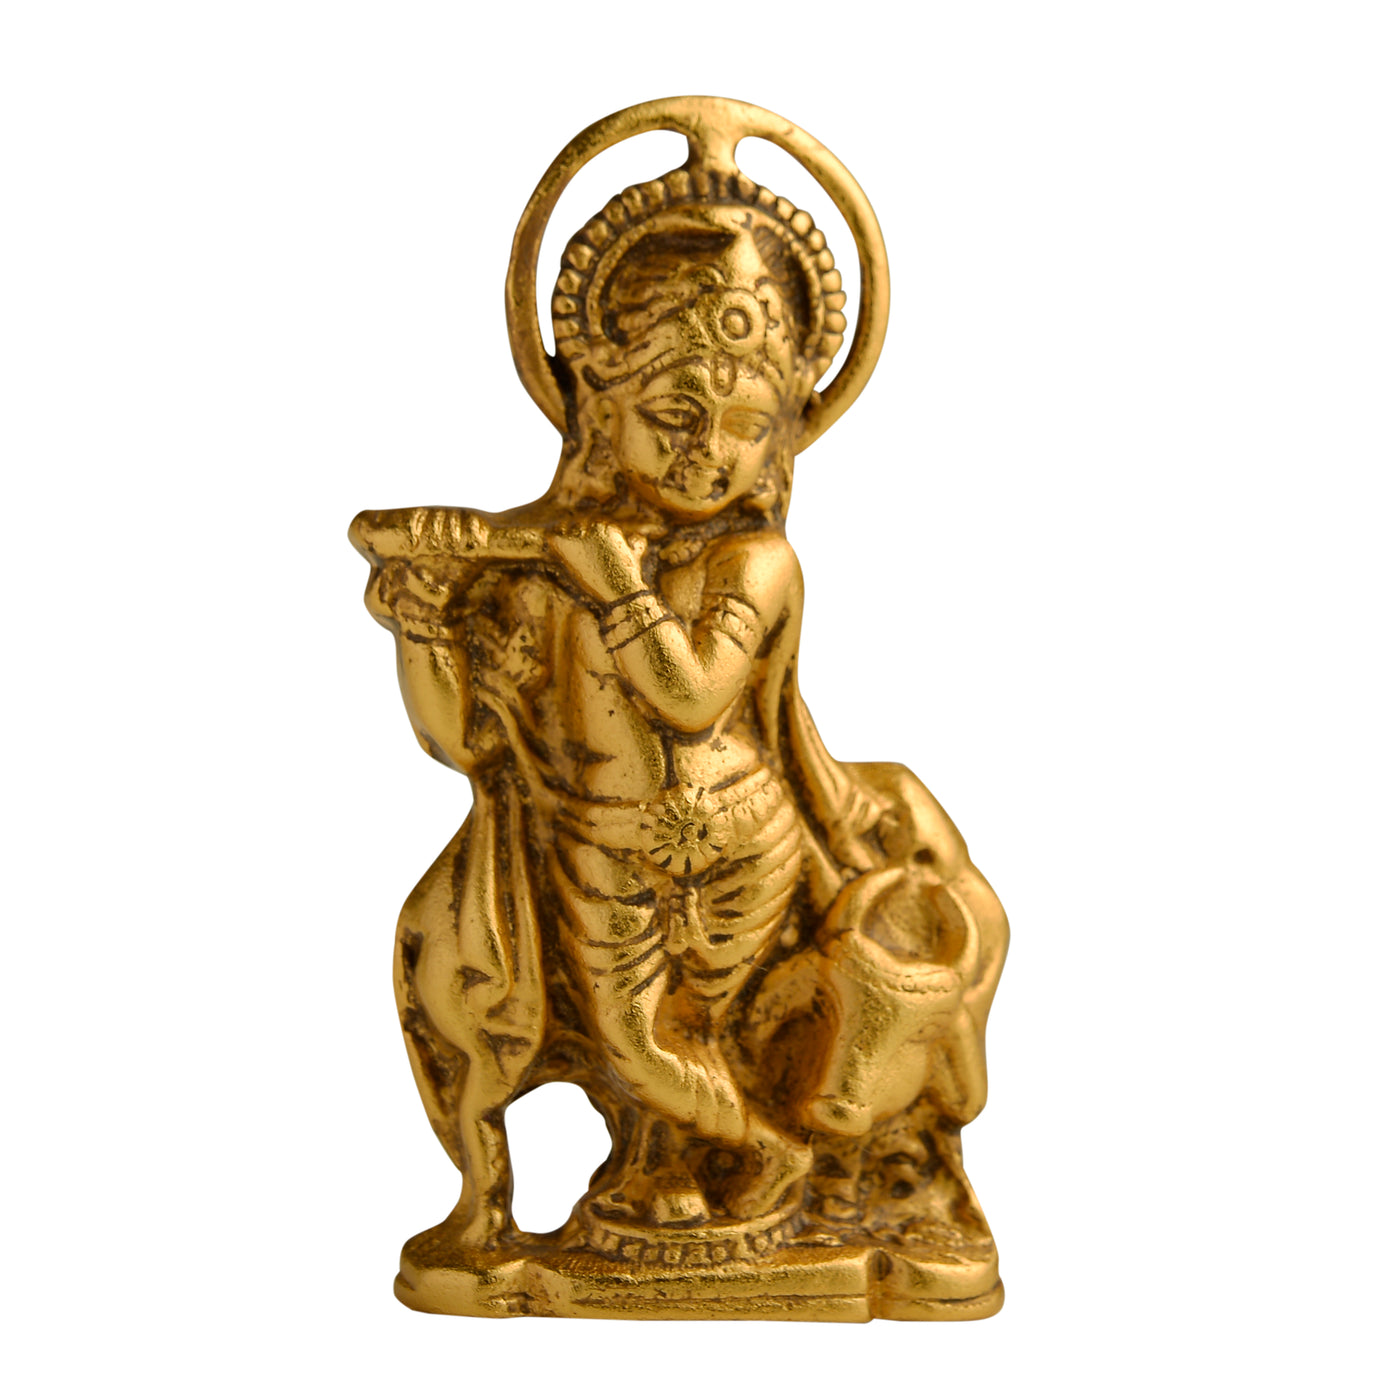 Estele Gold Plated Lord Krishna Idol (01-BG)